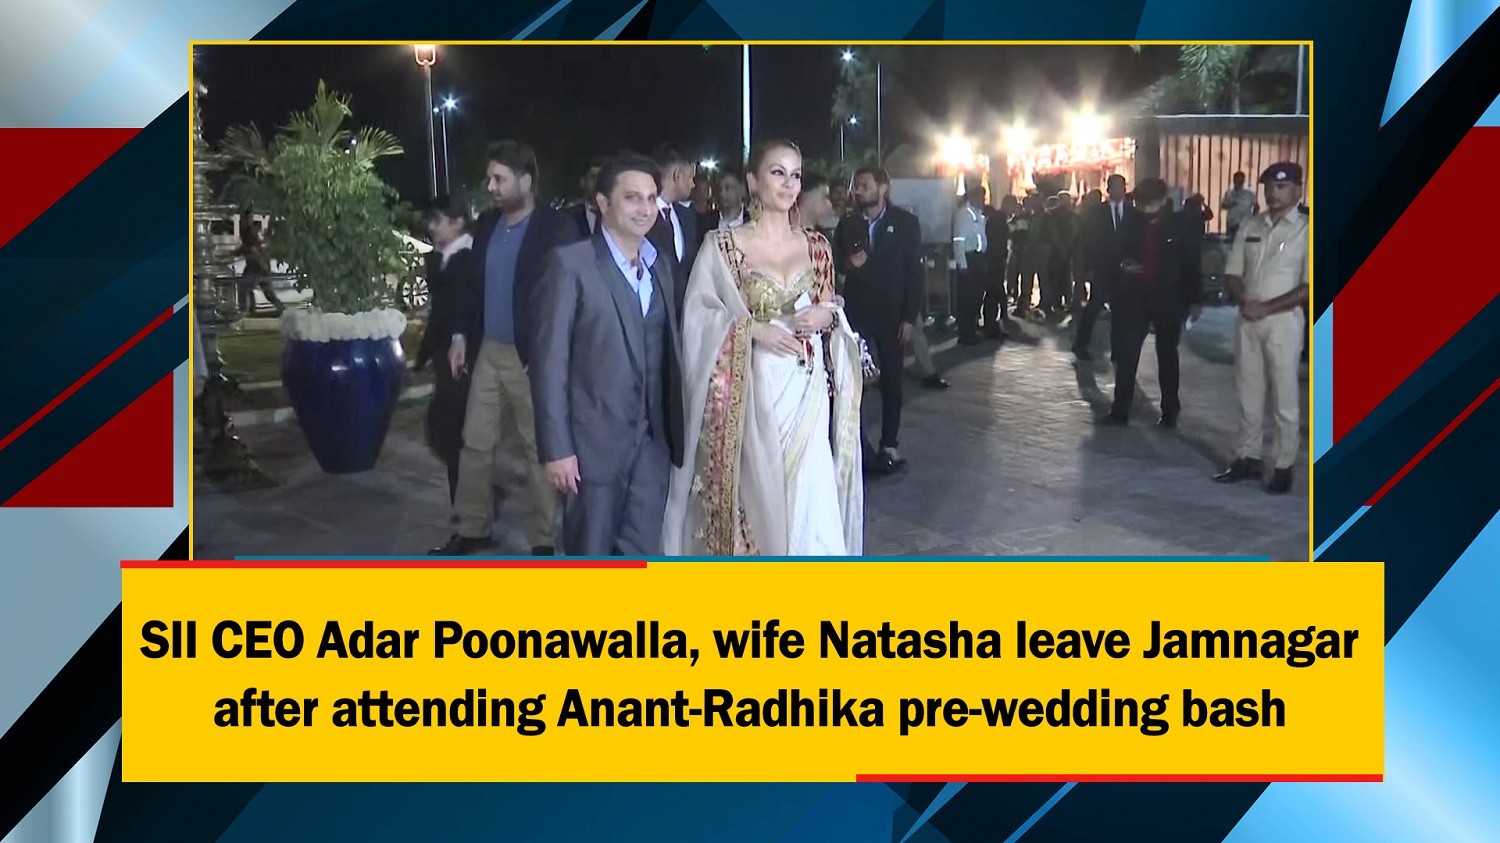 SII CEO Adar Poonawalla` wife Natasha leave Jamnagar after attending Anant-Radhika pre-wedding bash